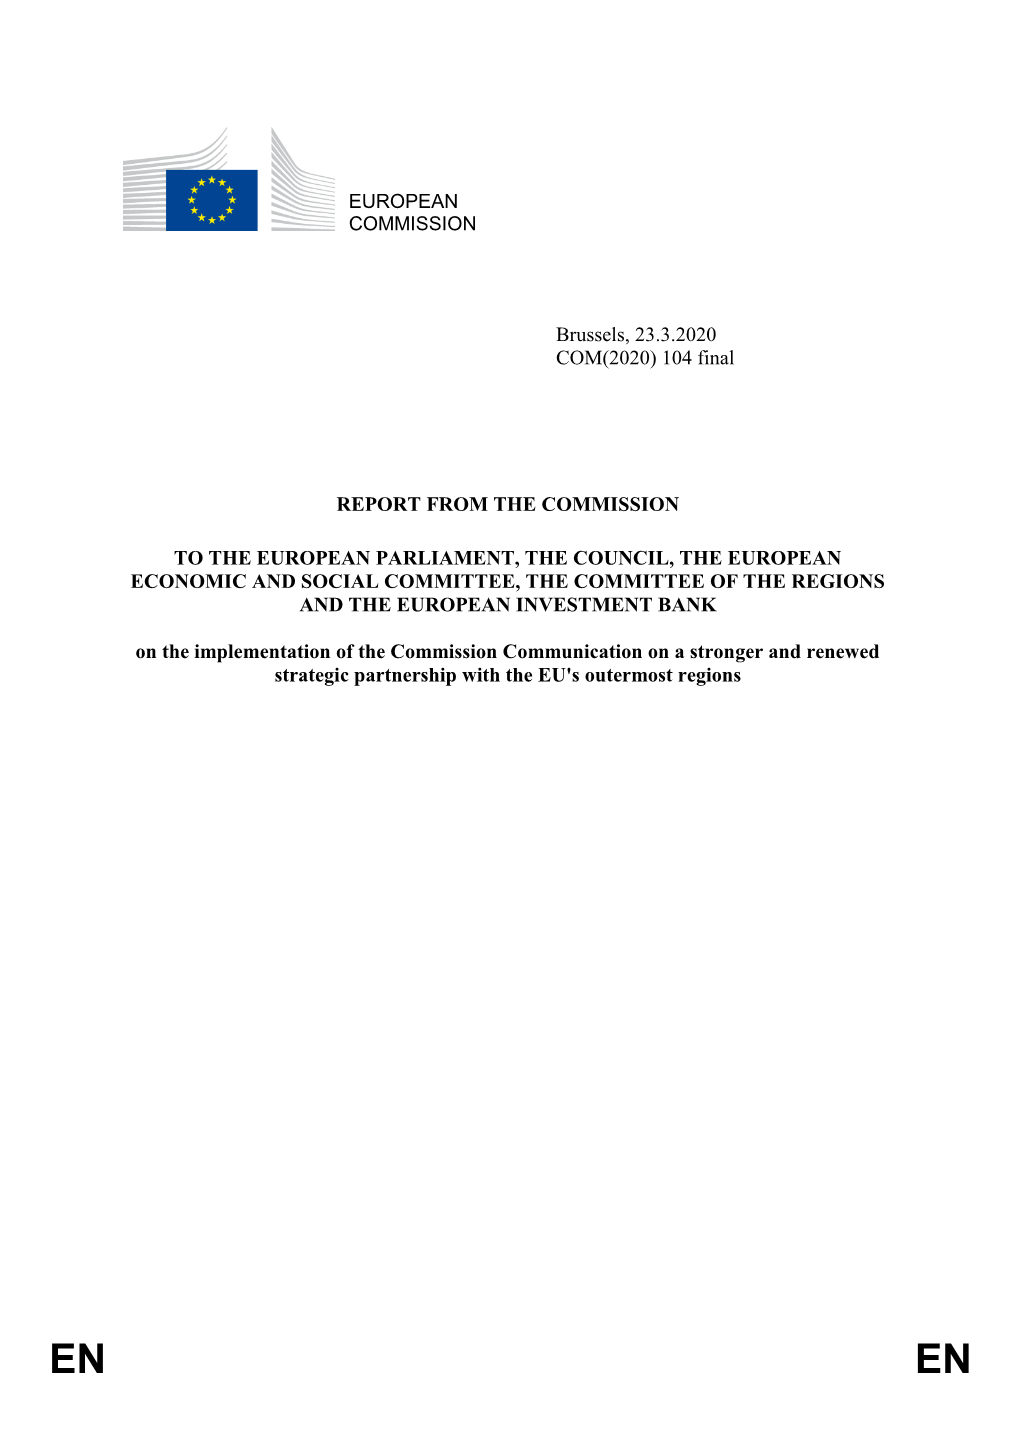 EUROPEAN COMMISSION Brussels, 23.3.2020 COM(2020)